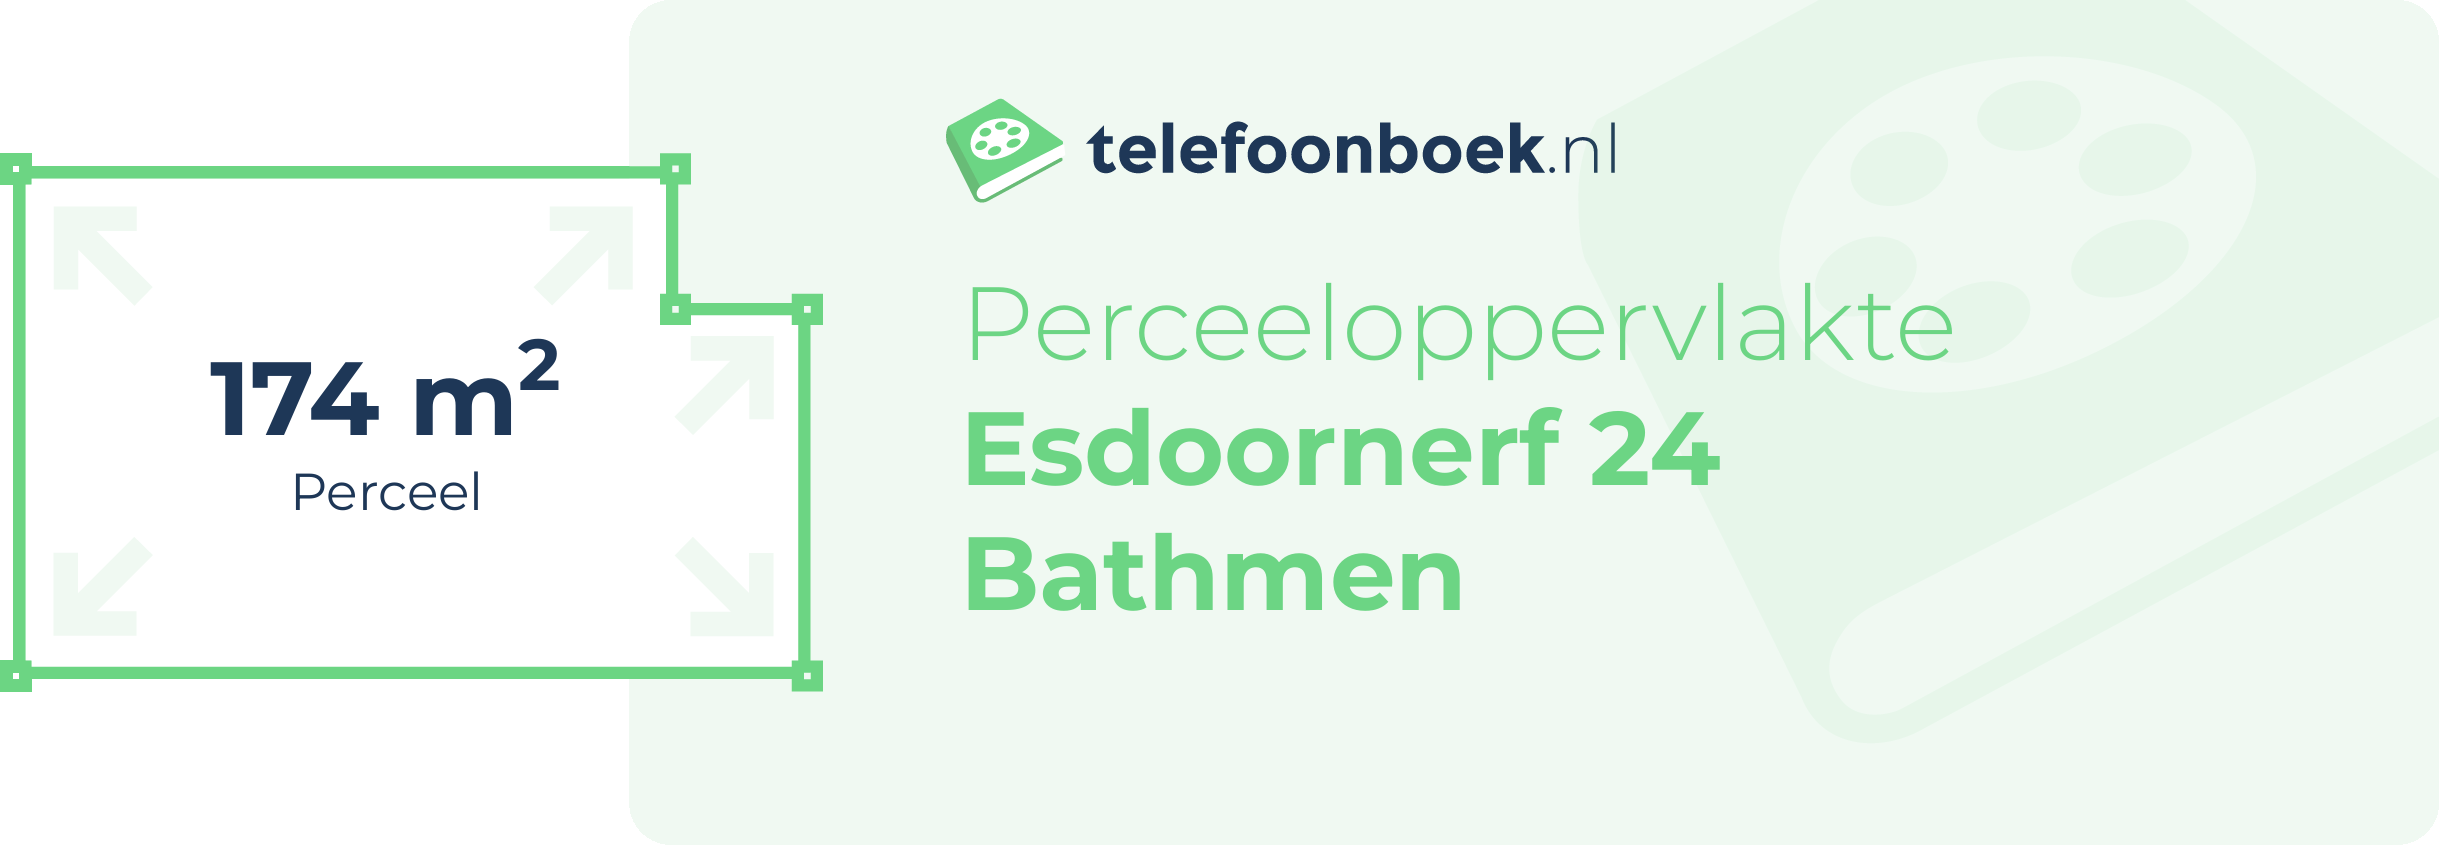 Perceeloppervlakte Esdoornerf 24 Bathmen